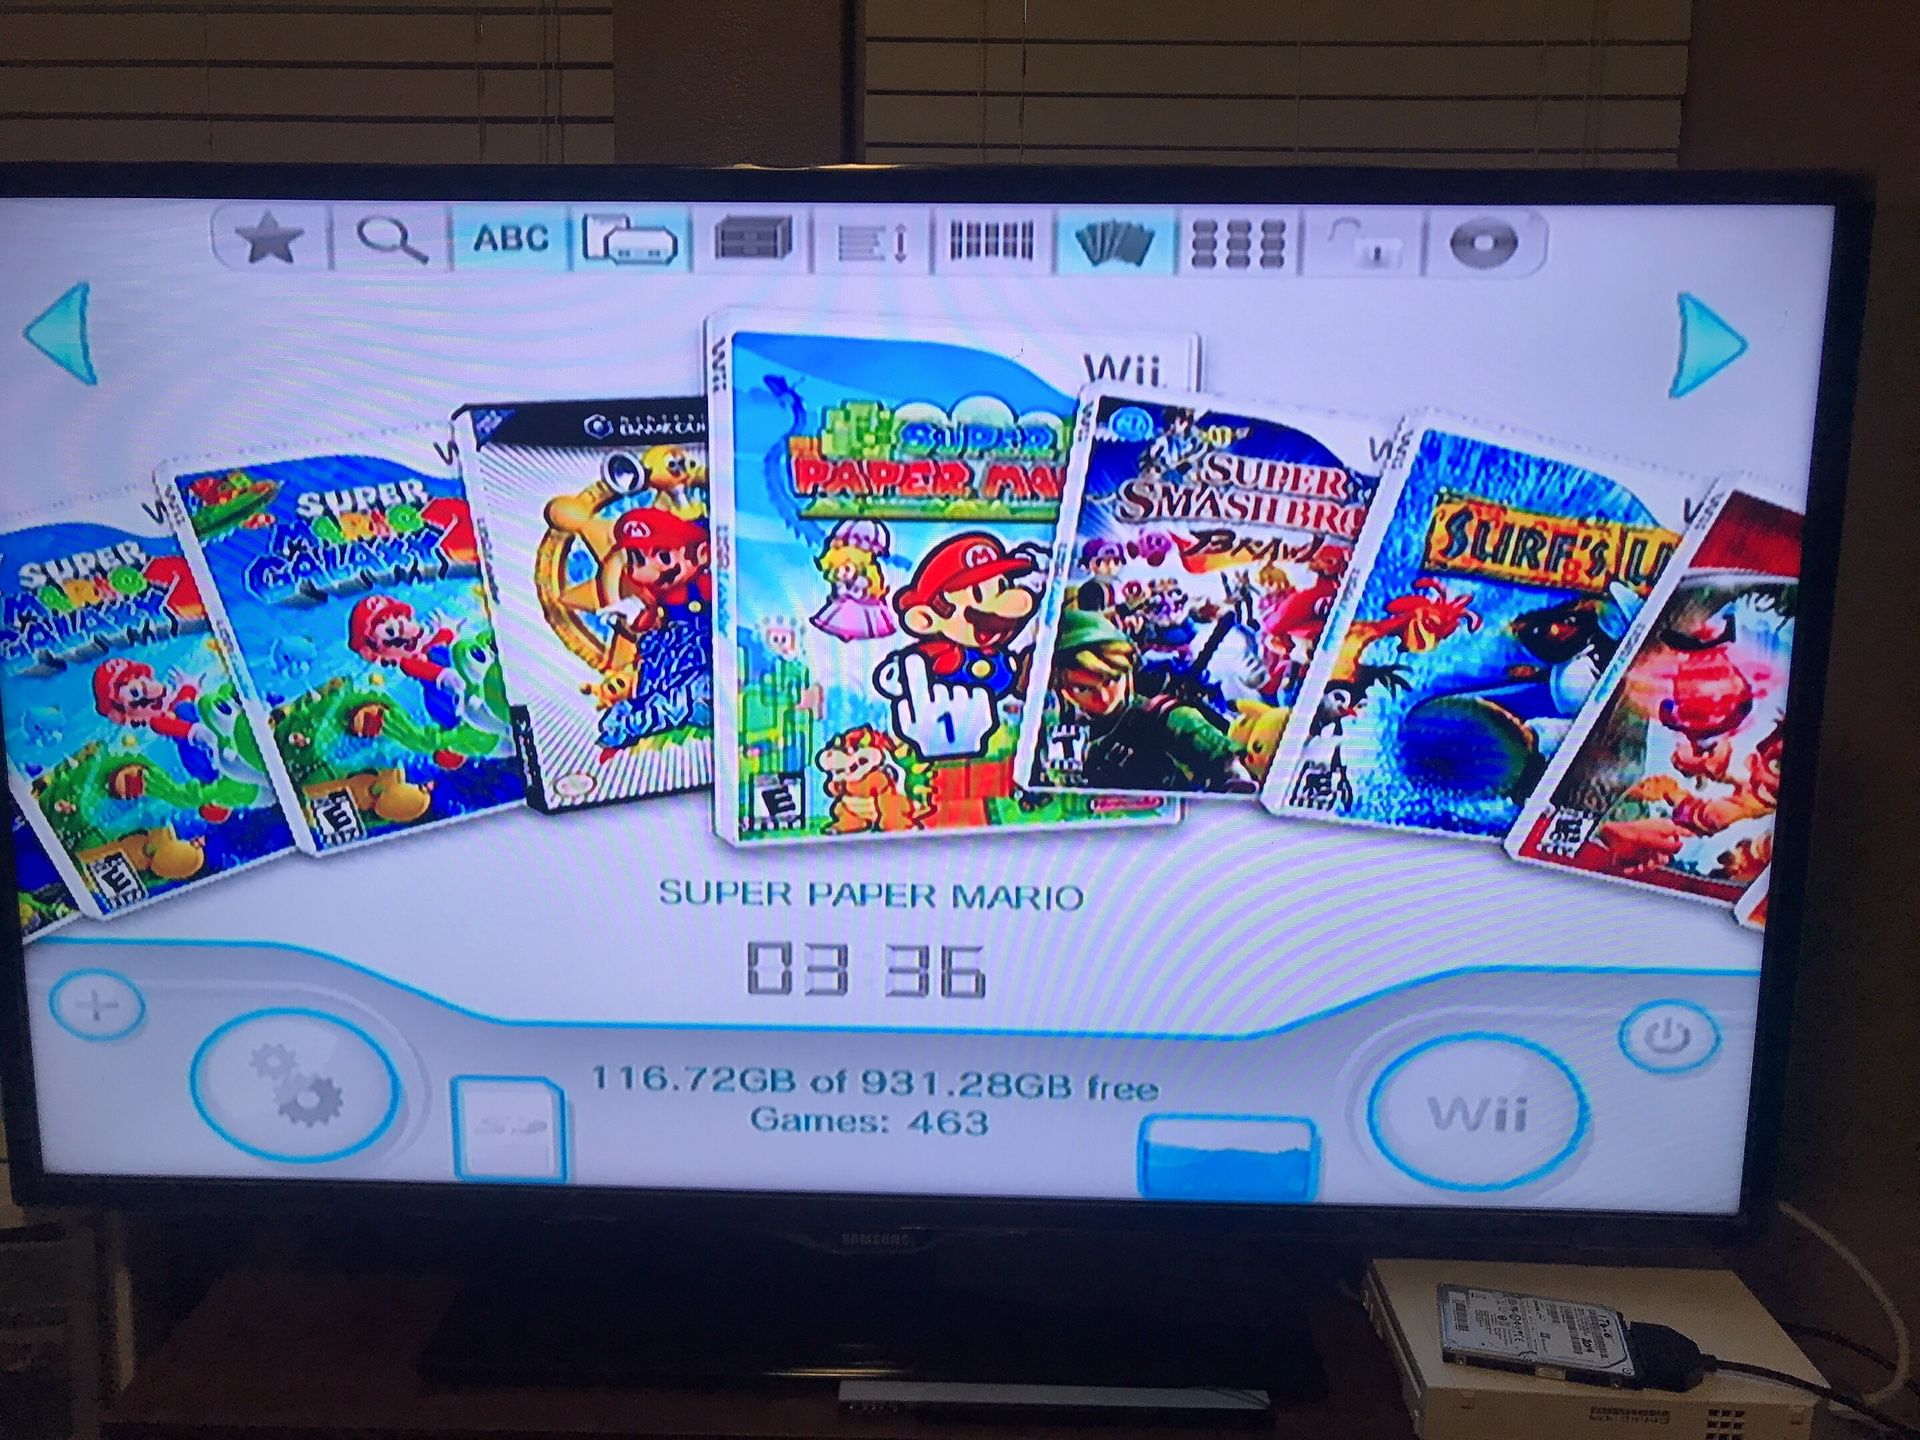 Modded Nintendo Wii W/ 453 Games